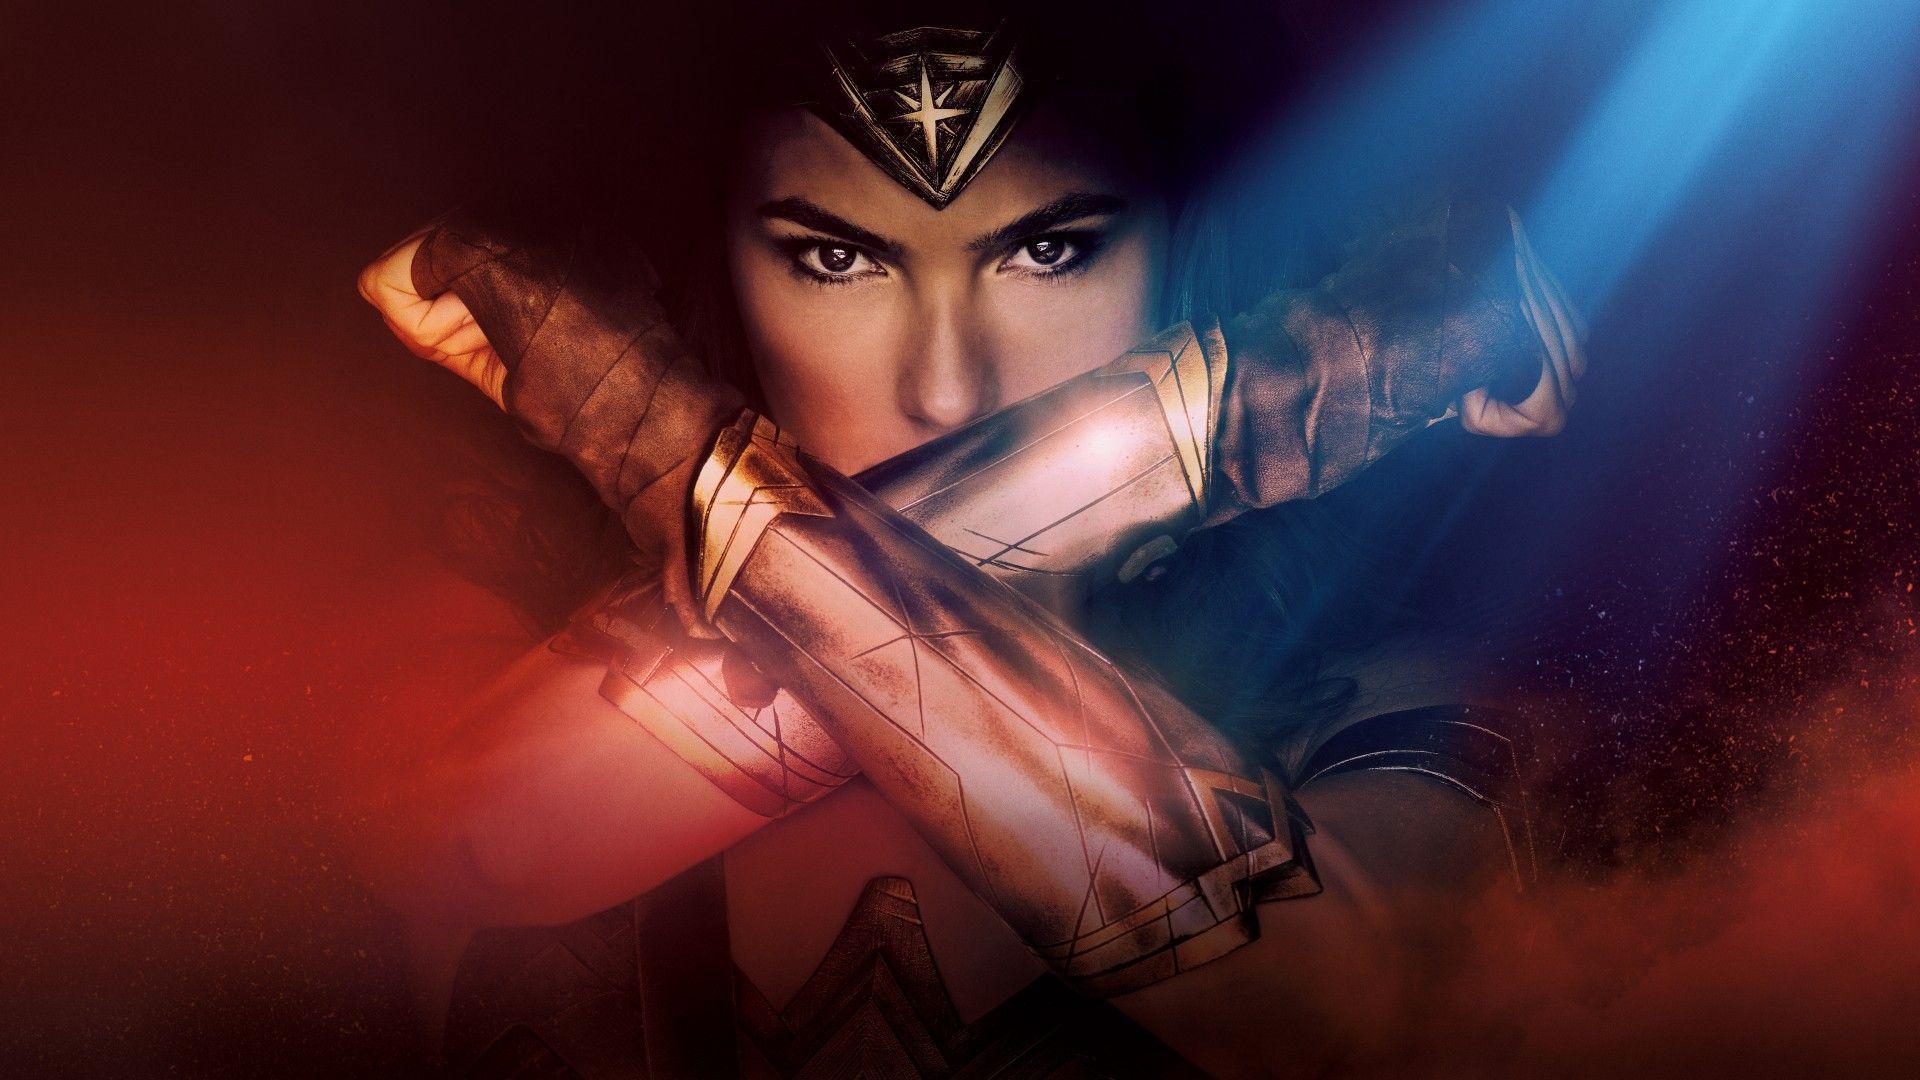 Wallpaper Gal Gadot, Wonder Woman, HD, Movies